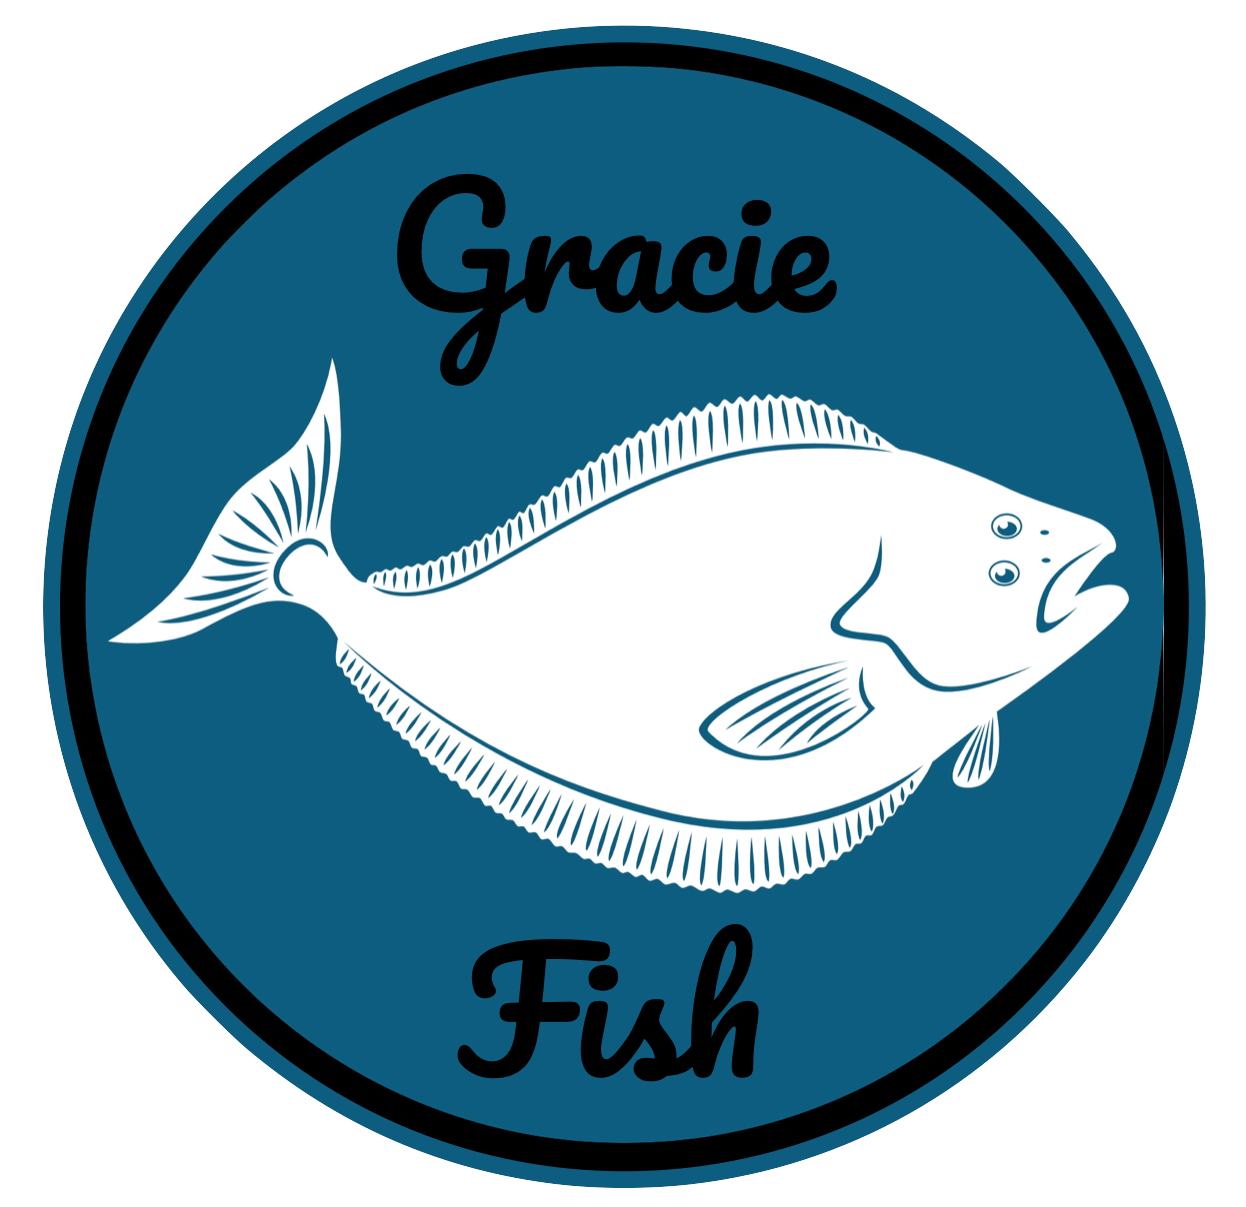 Gracie Fish logo